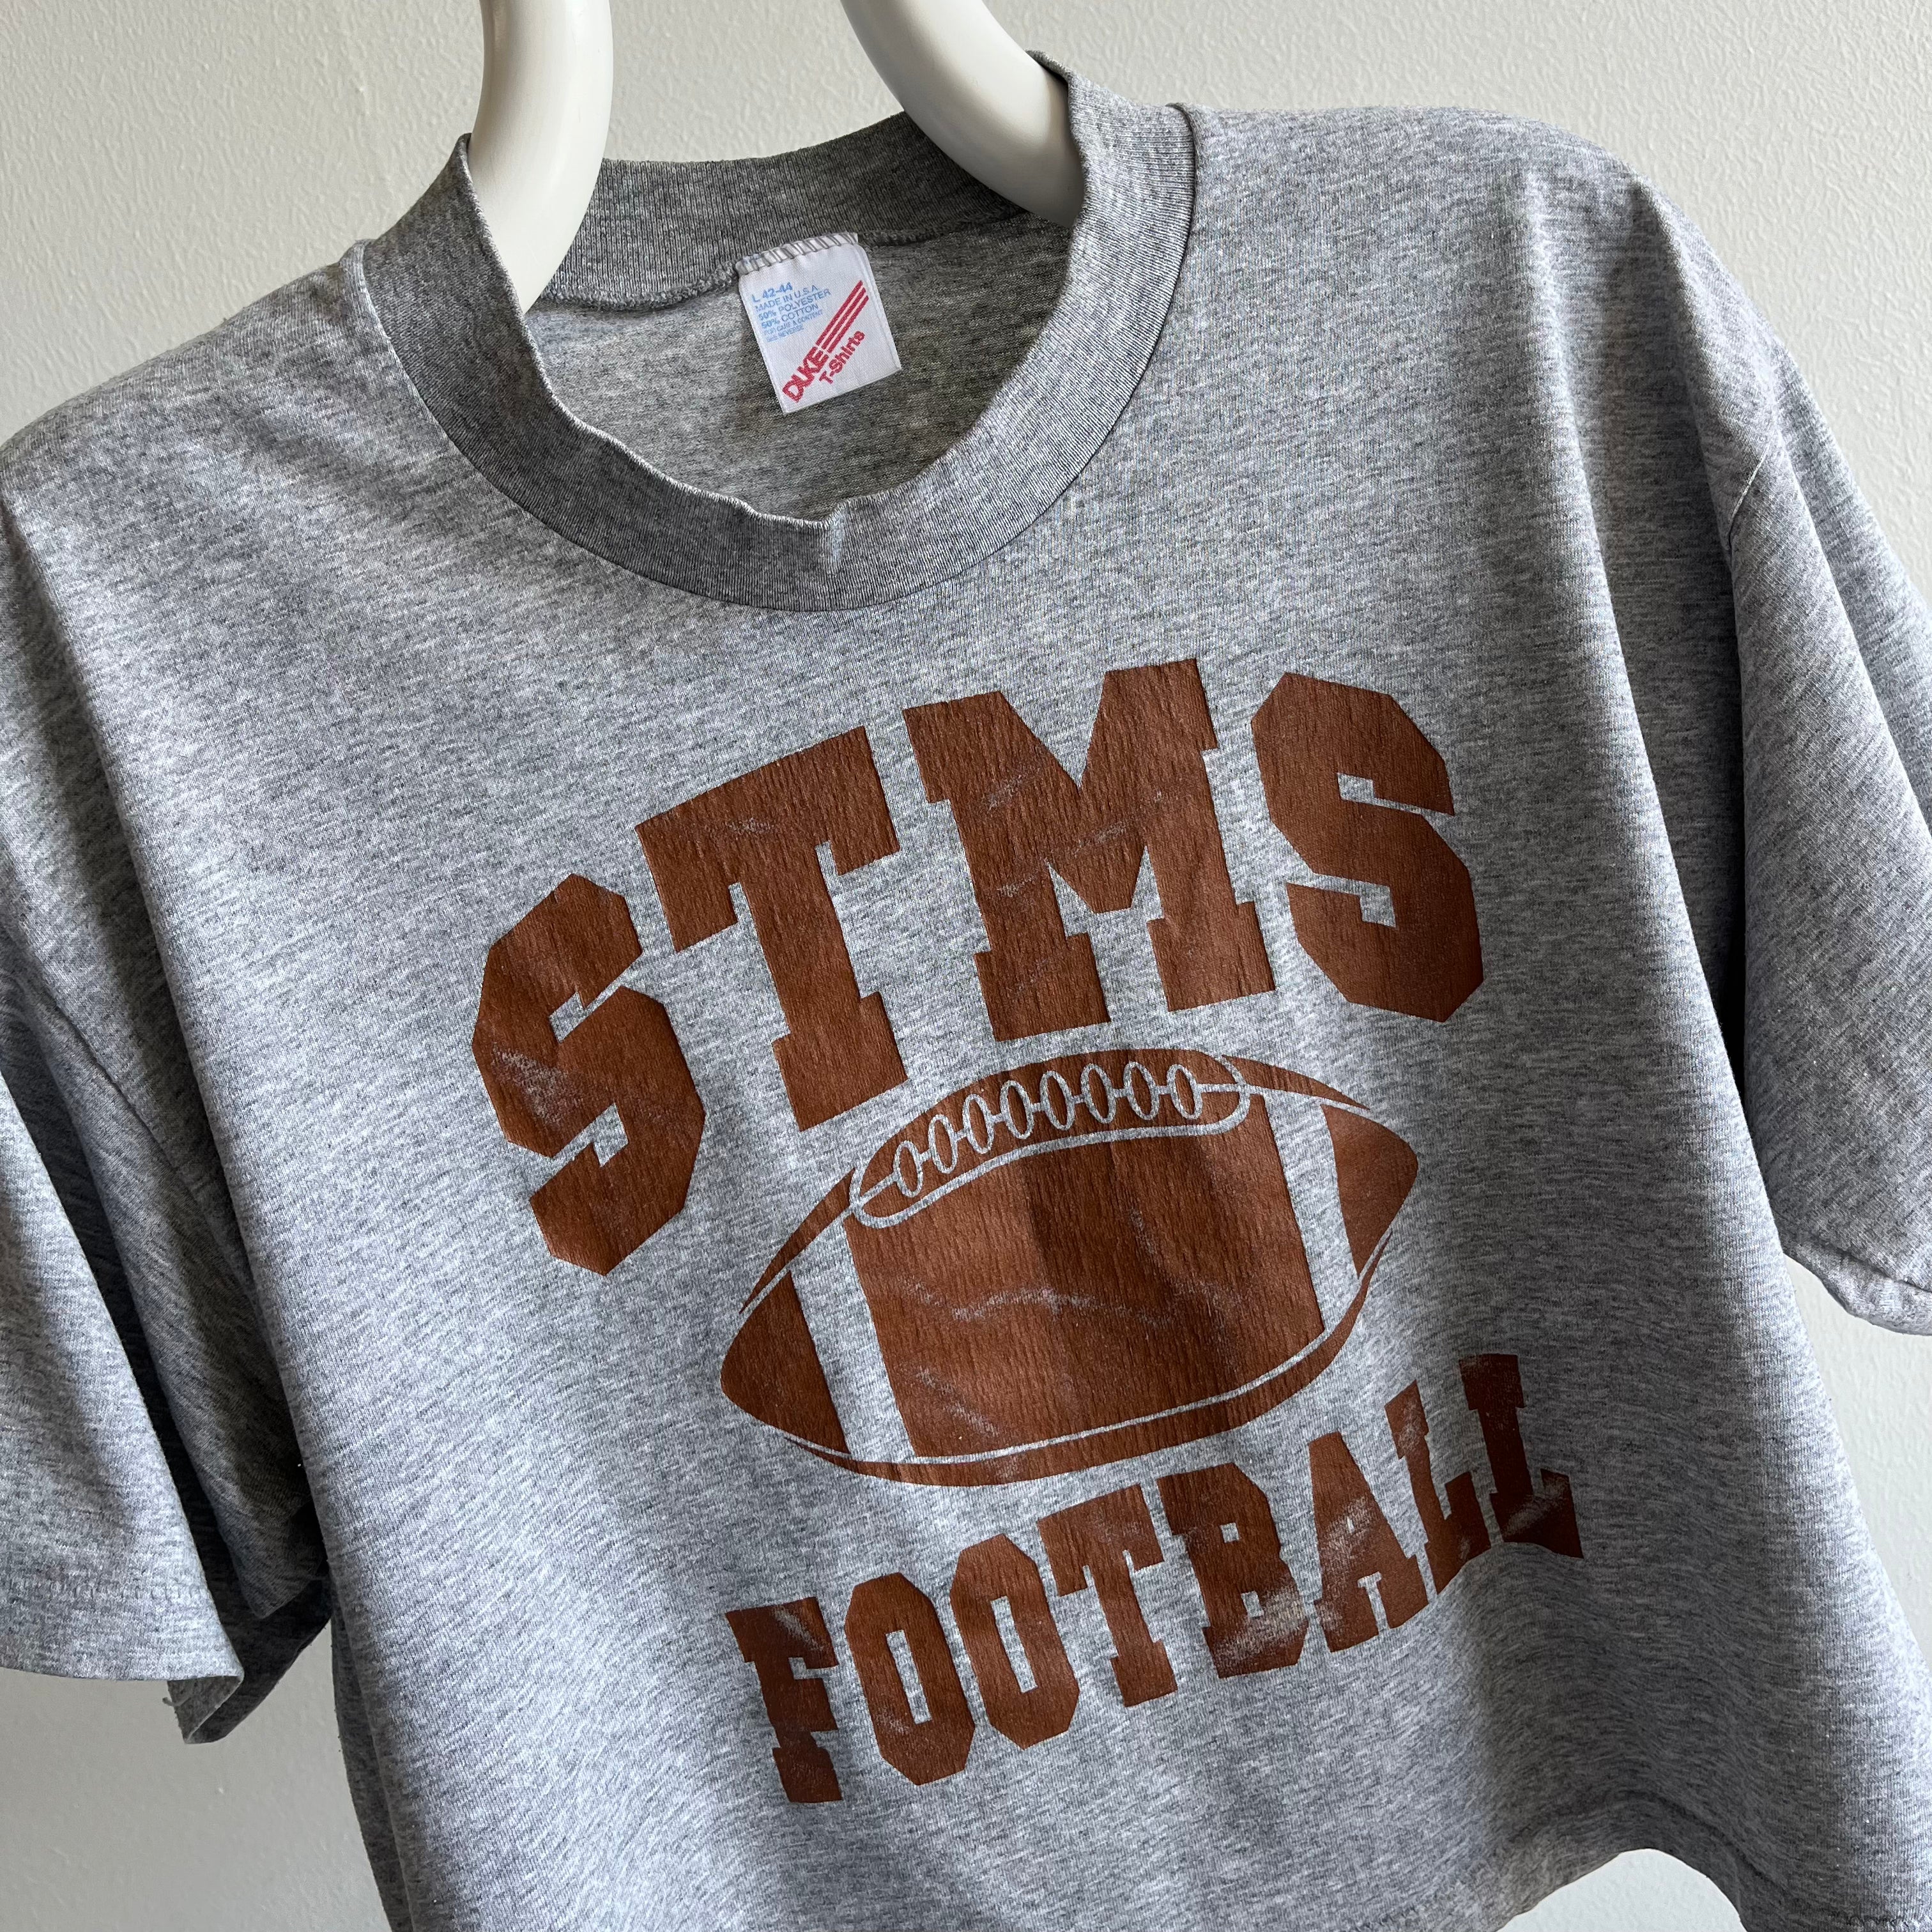 1980s STMS Football Crop by Duke